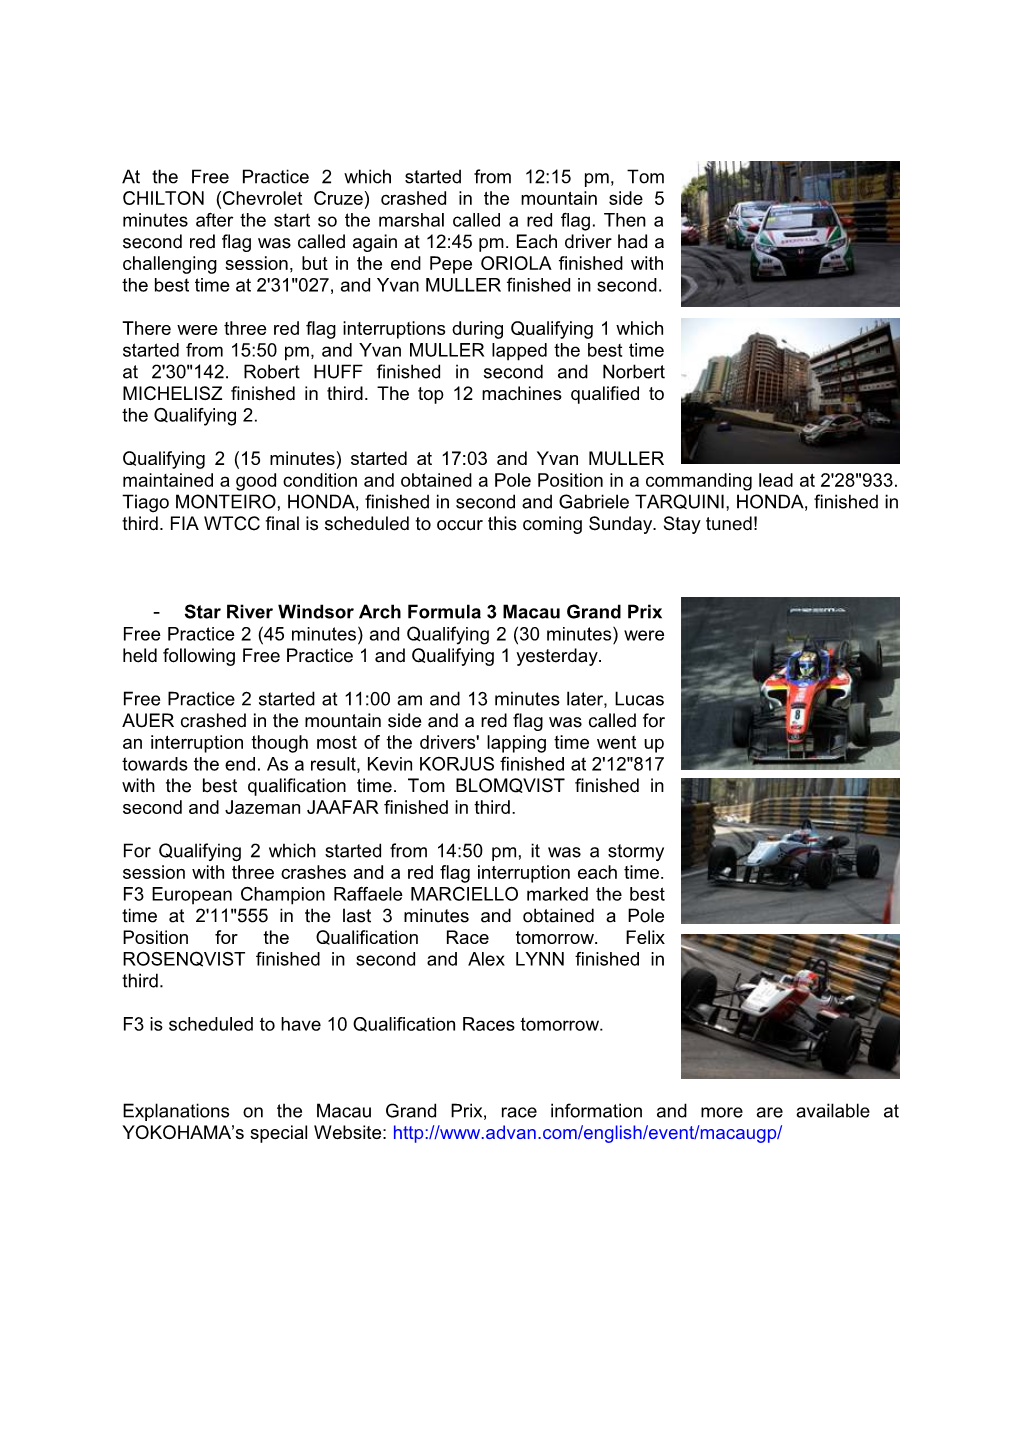 YOKOHAMA Macau Grand Prix 2013 Race Report Vol.2